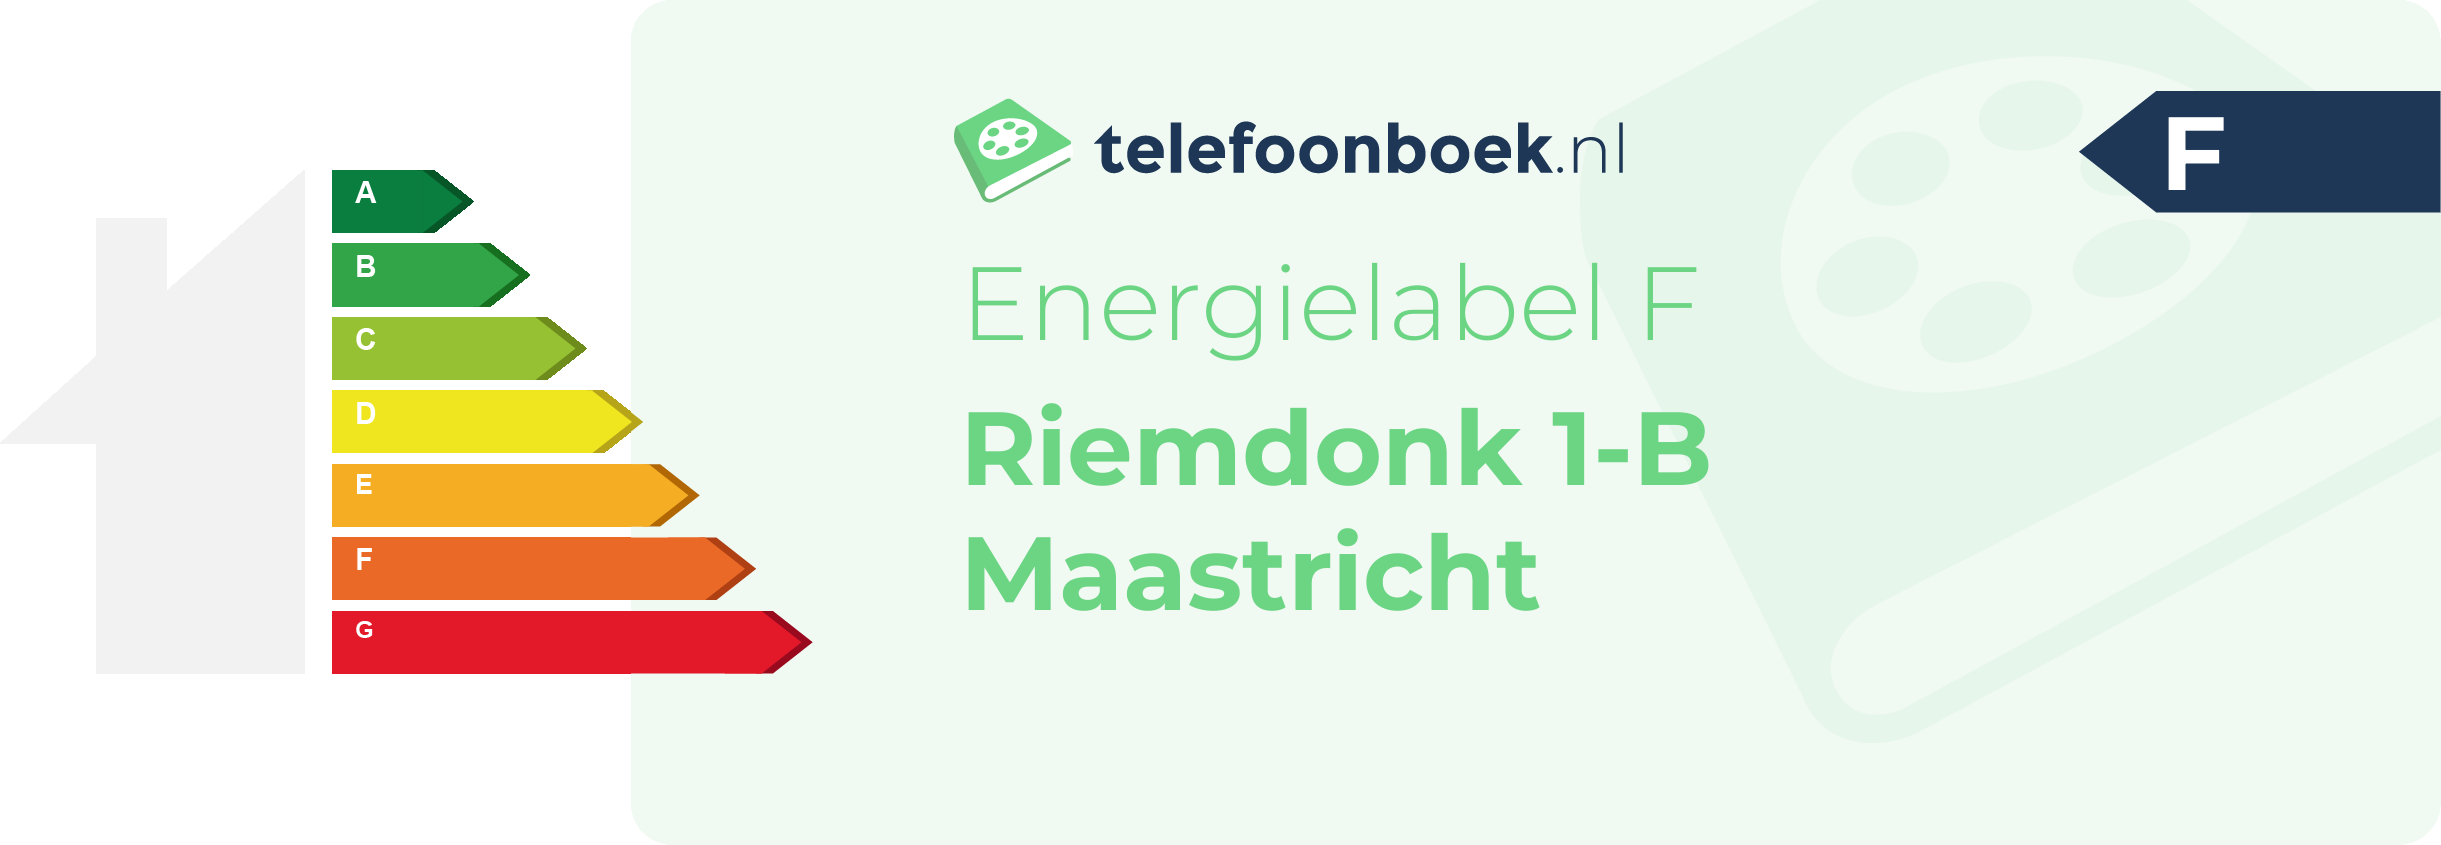 Energielabel Riemdonk 1-B Maastricht